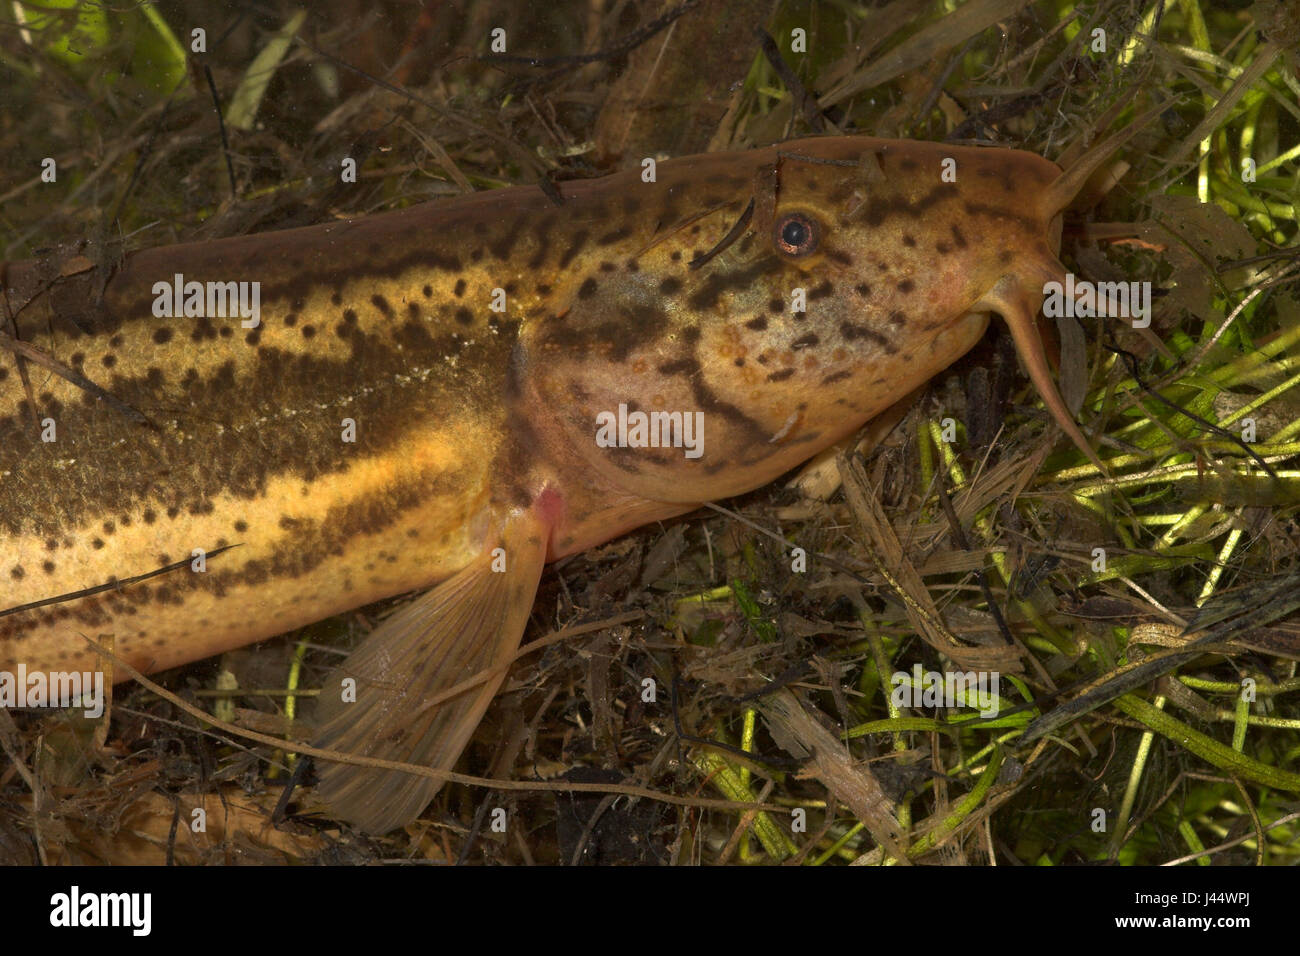 wheaterfish between dense water vegetation Stock Photo